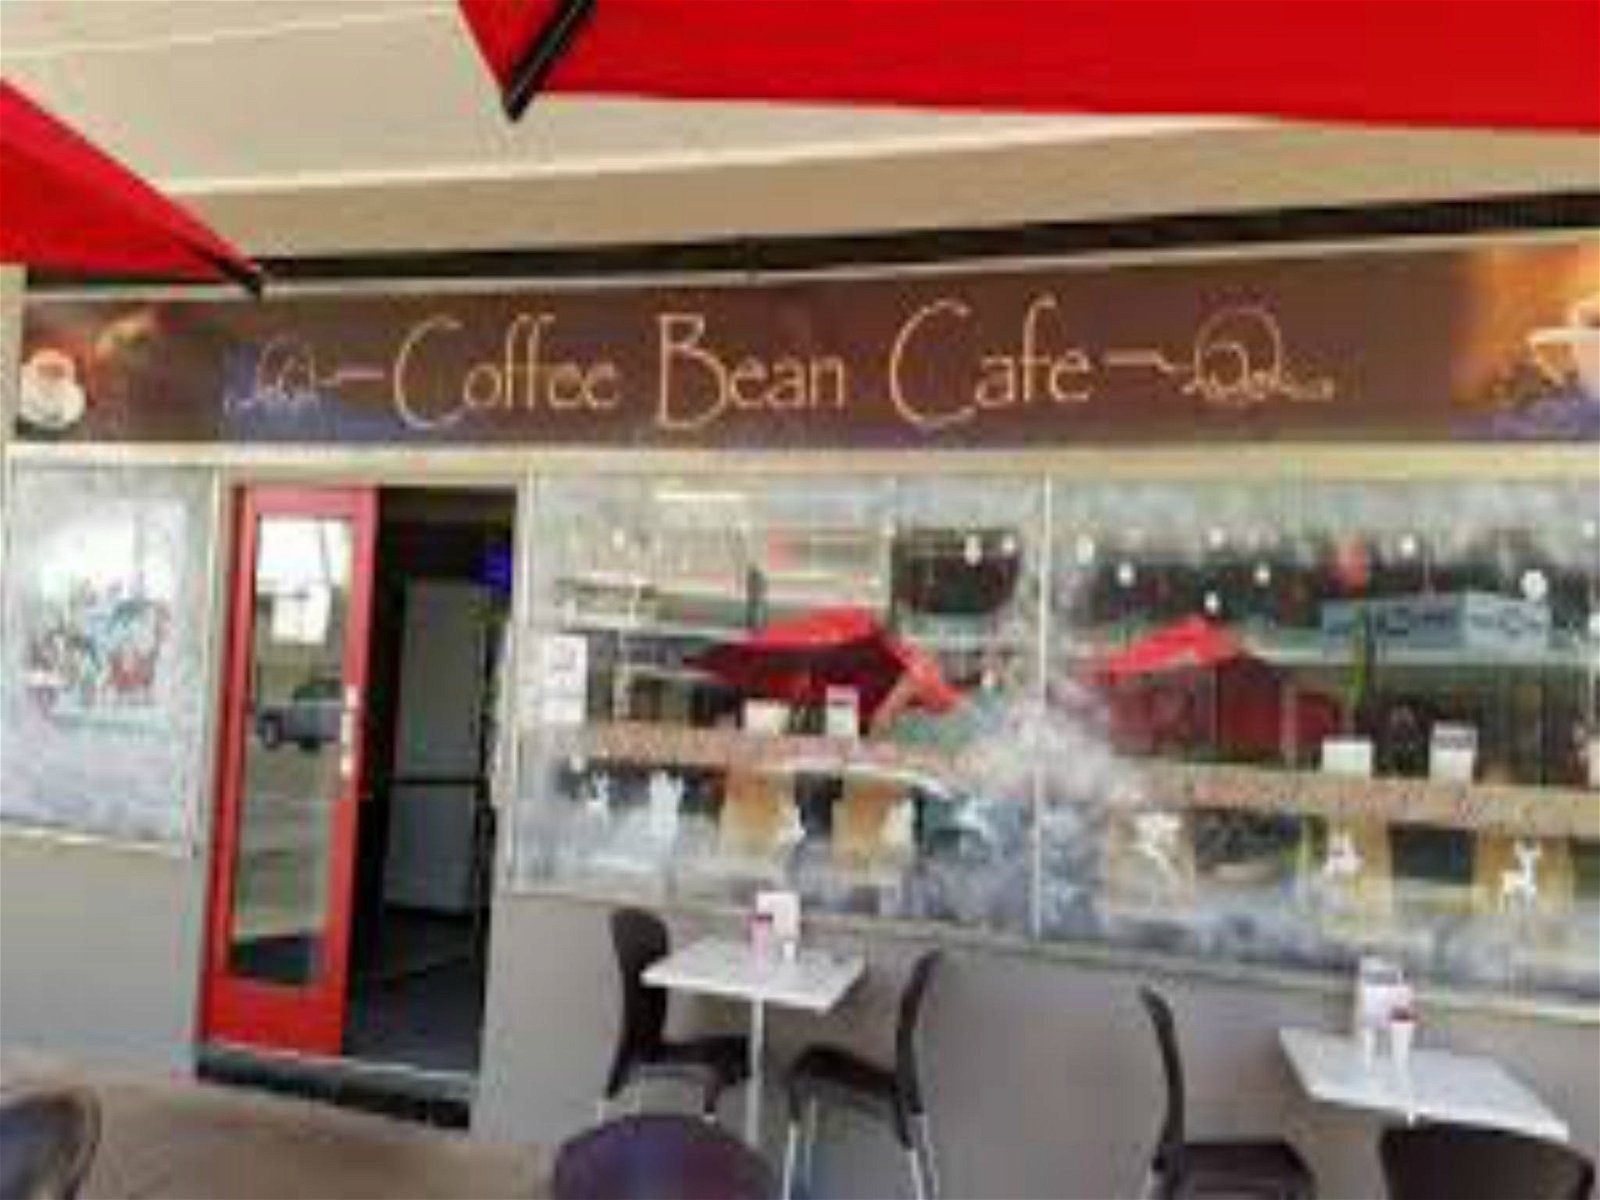 Coffee Bean Cafe